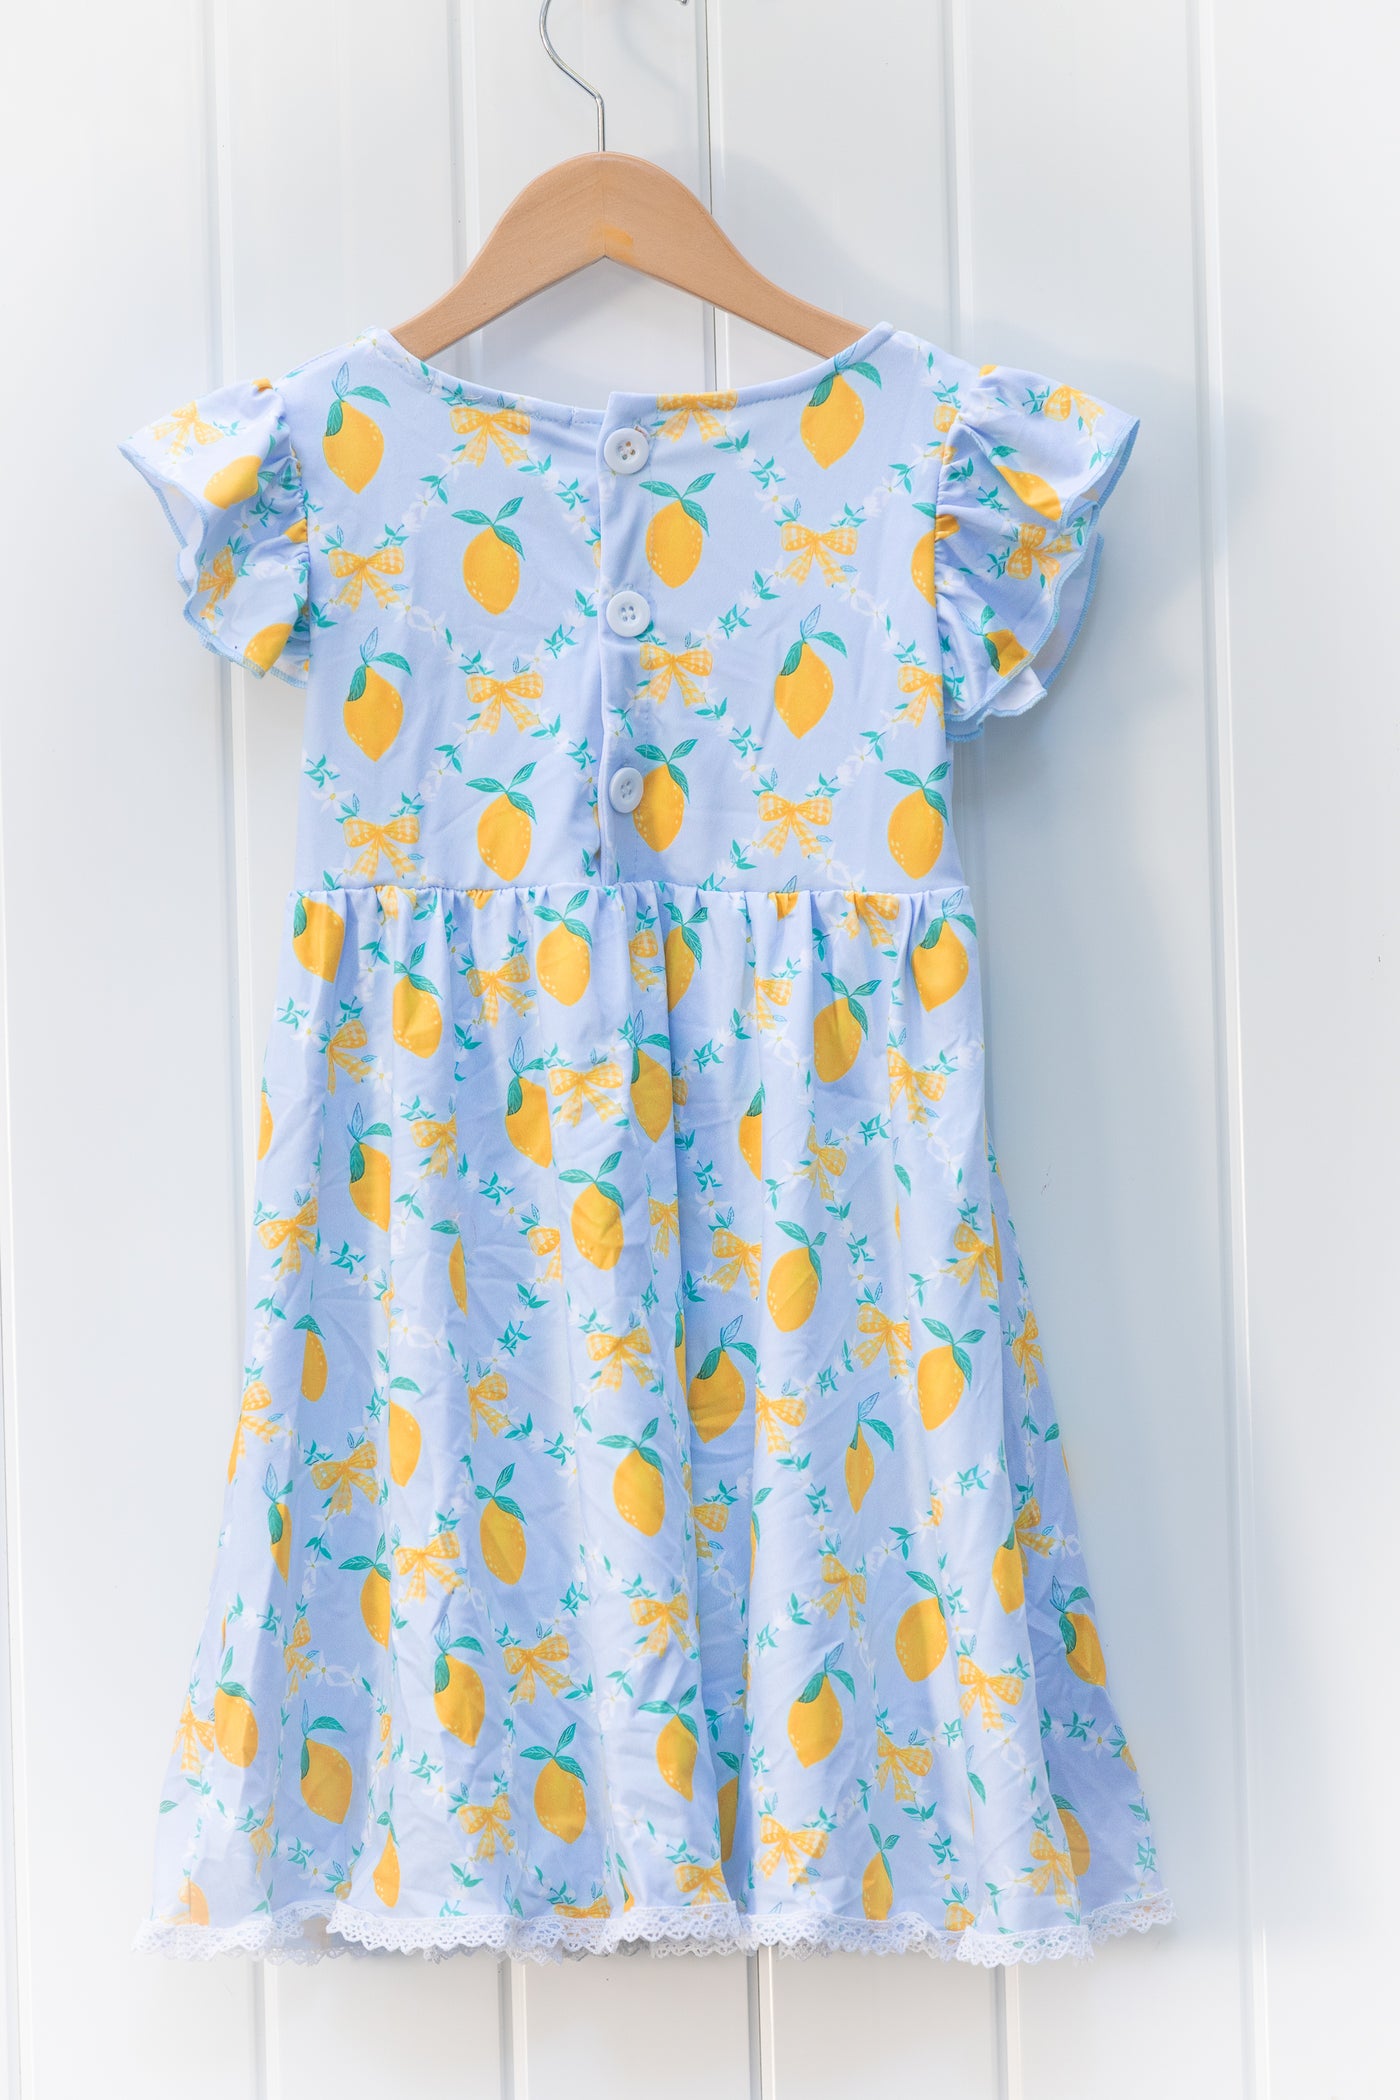 Lemon Trellis Dress